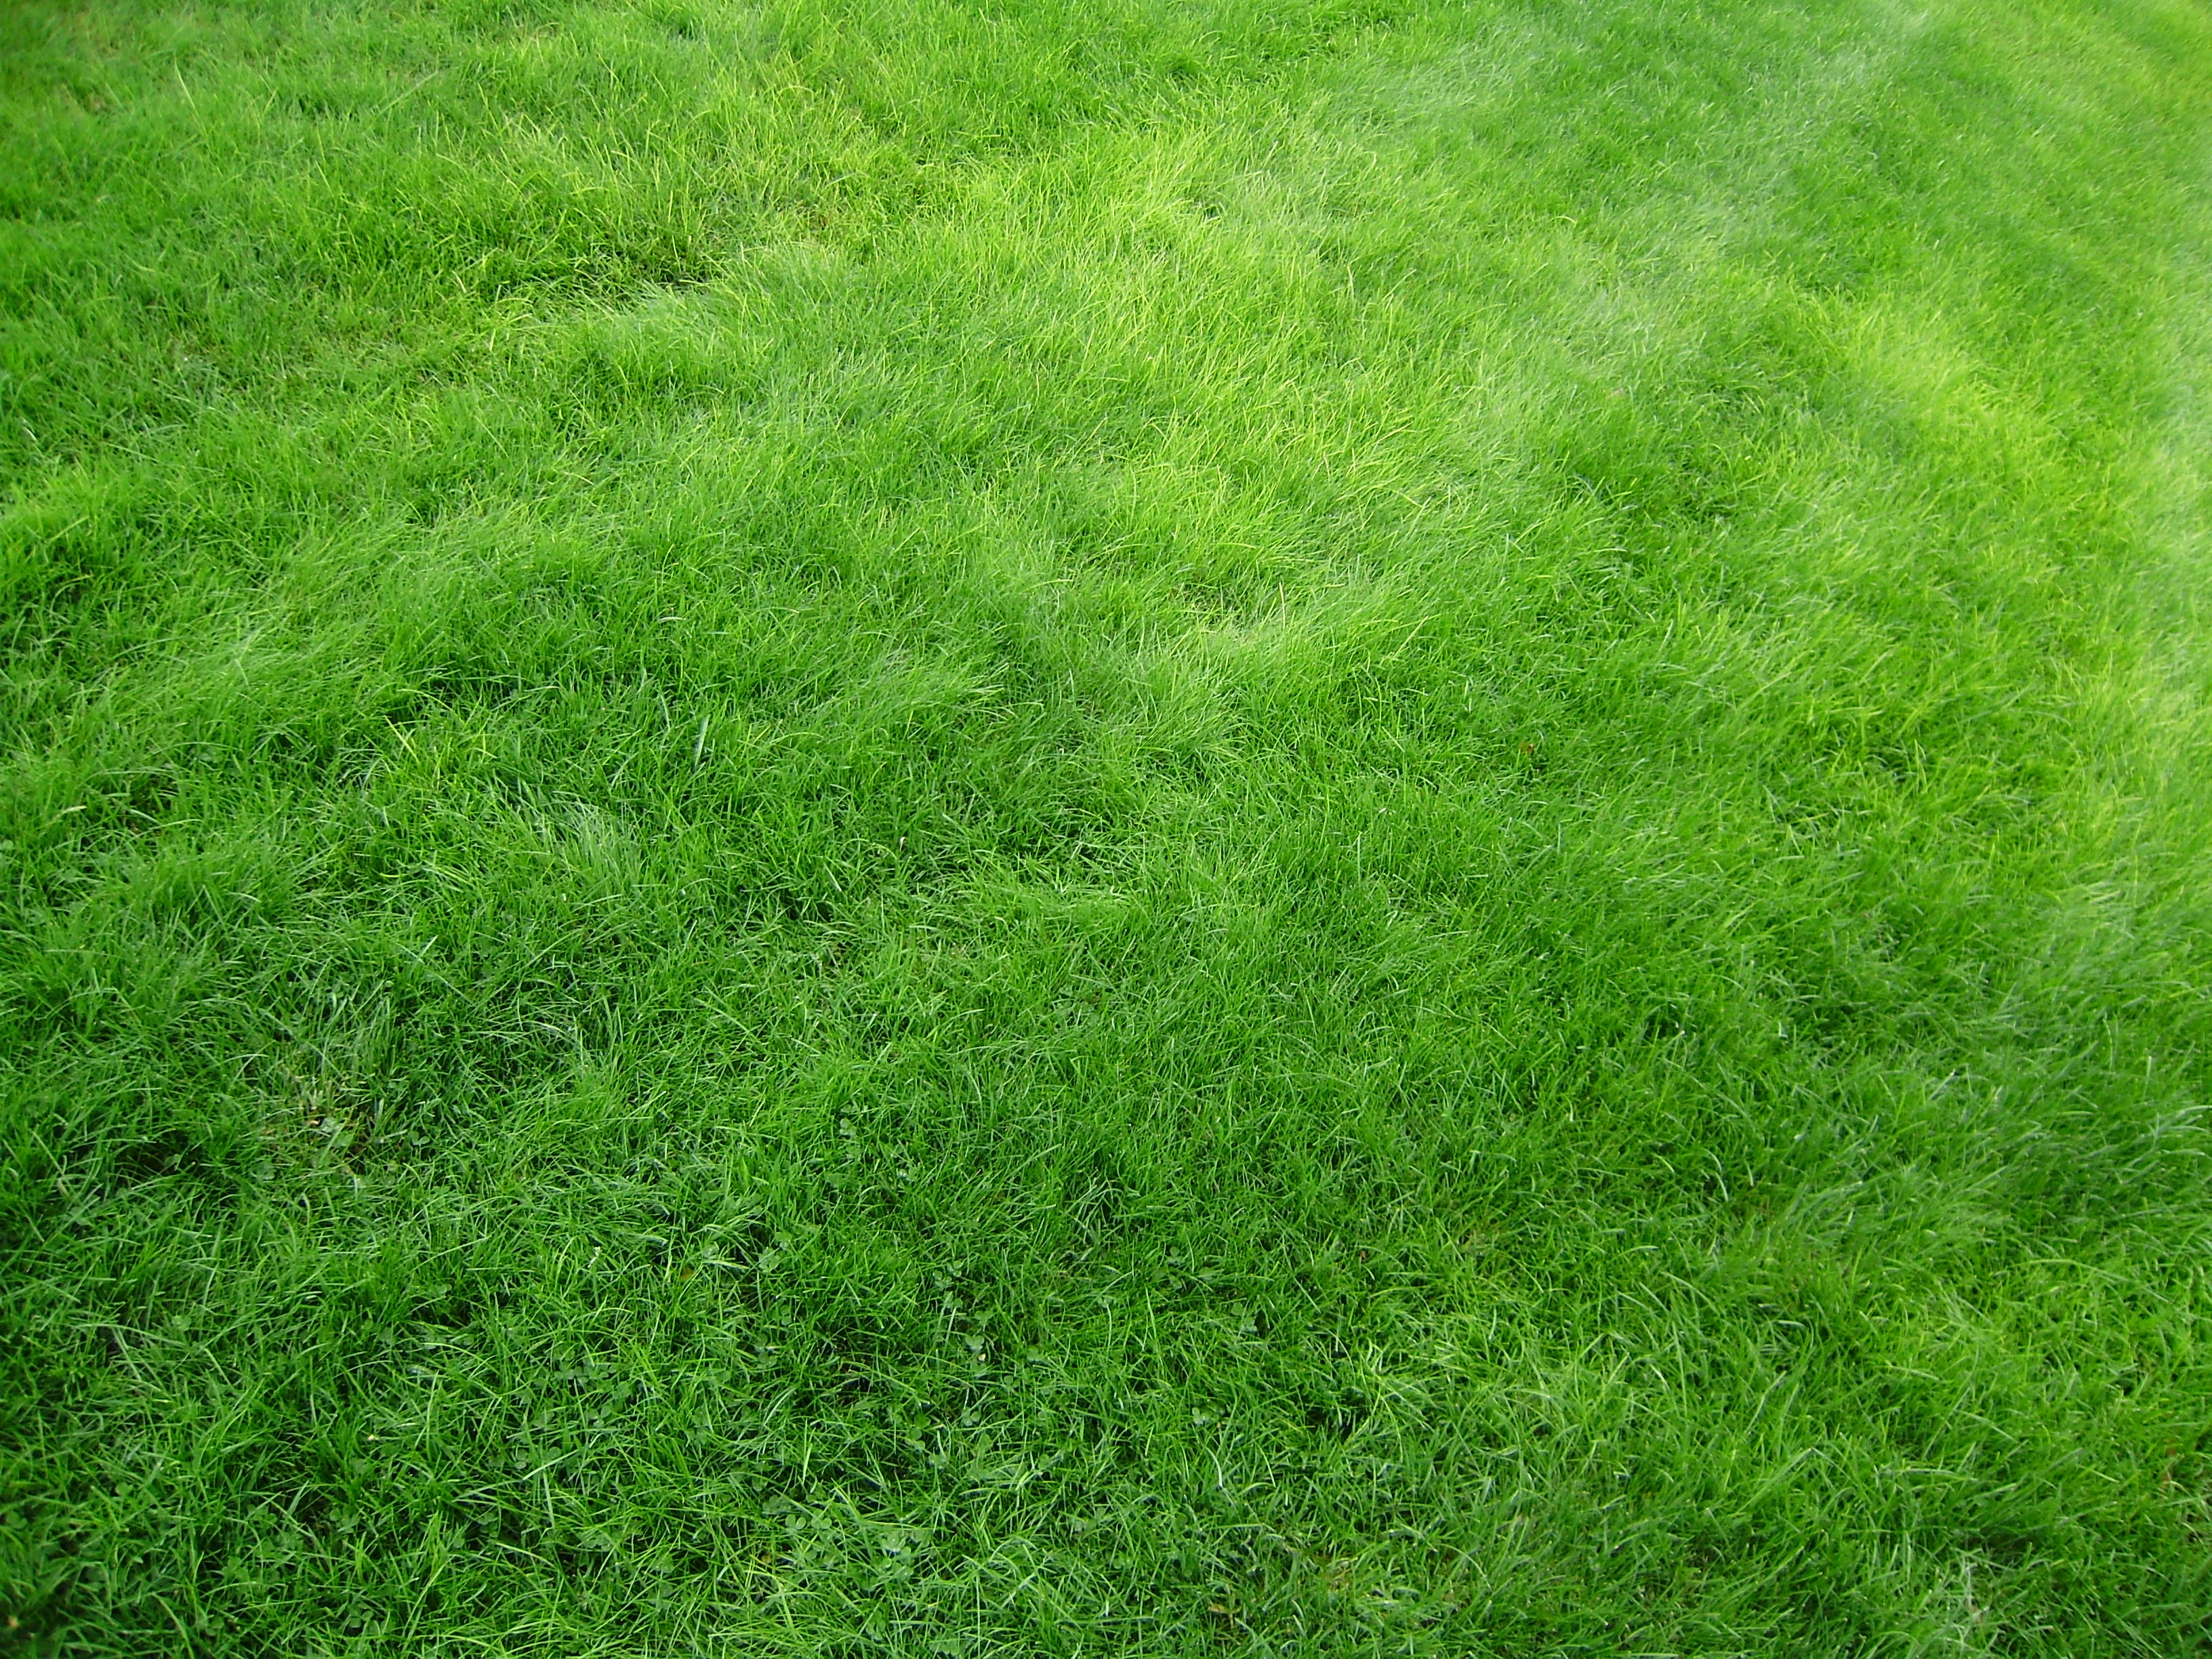 Free HD grass, lawn, green, texture, field, textures